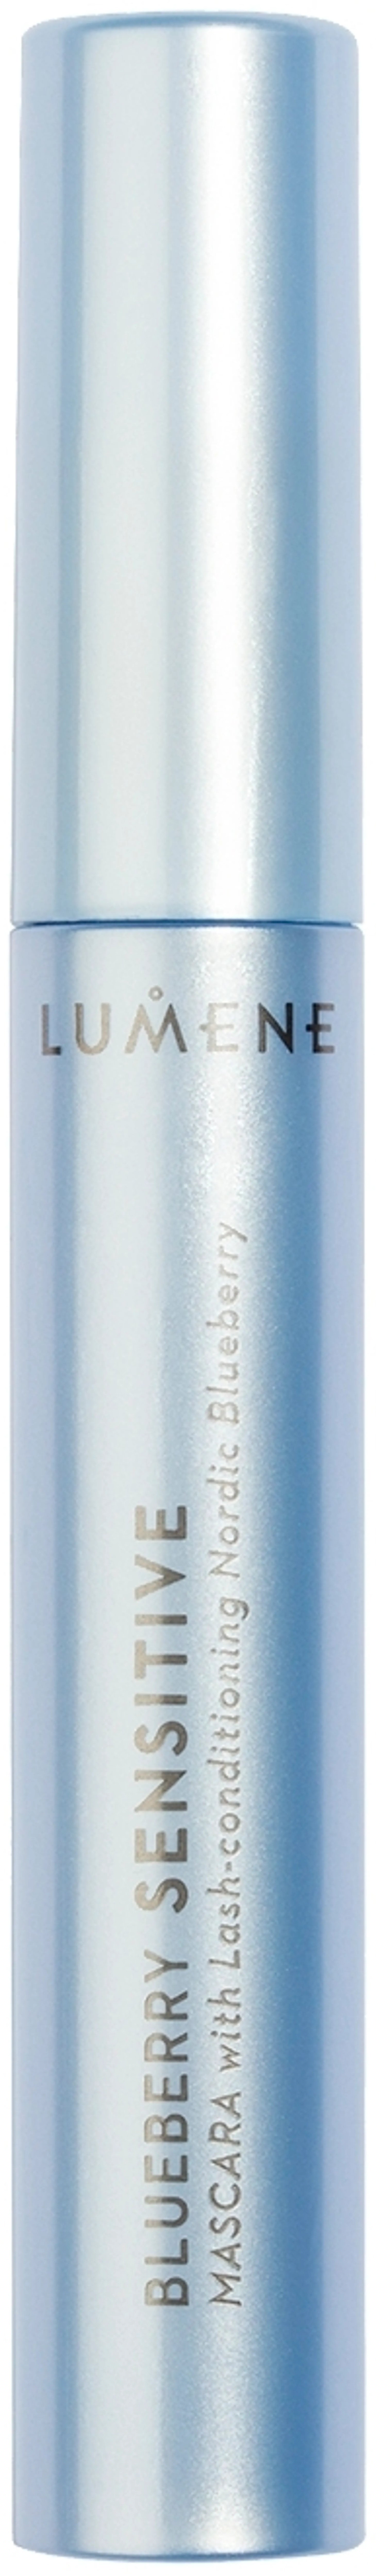 Lumene Blueberry Sensitive Mascara Black 7ml - 1